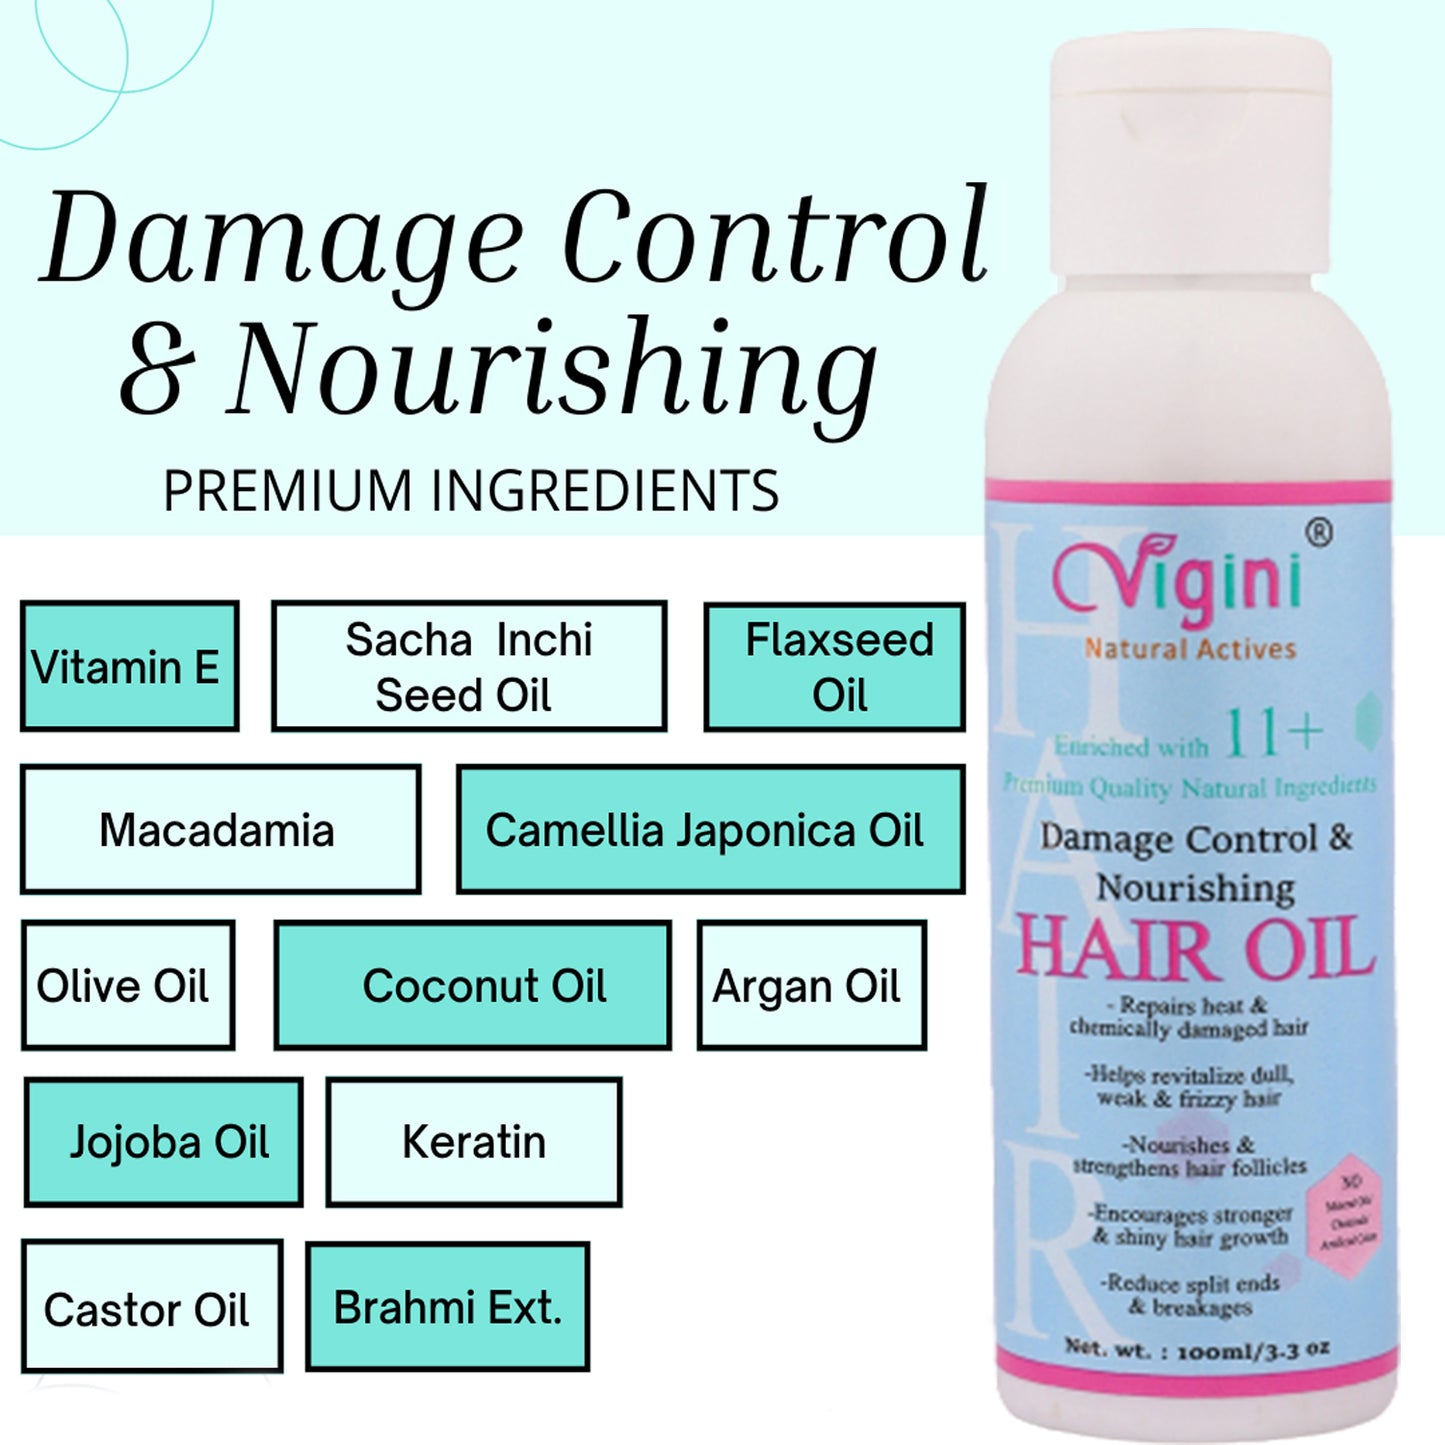 Damage Control & Nourishing Hair Oil